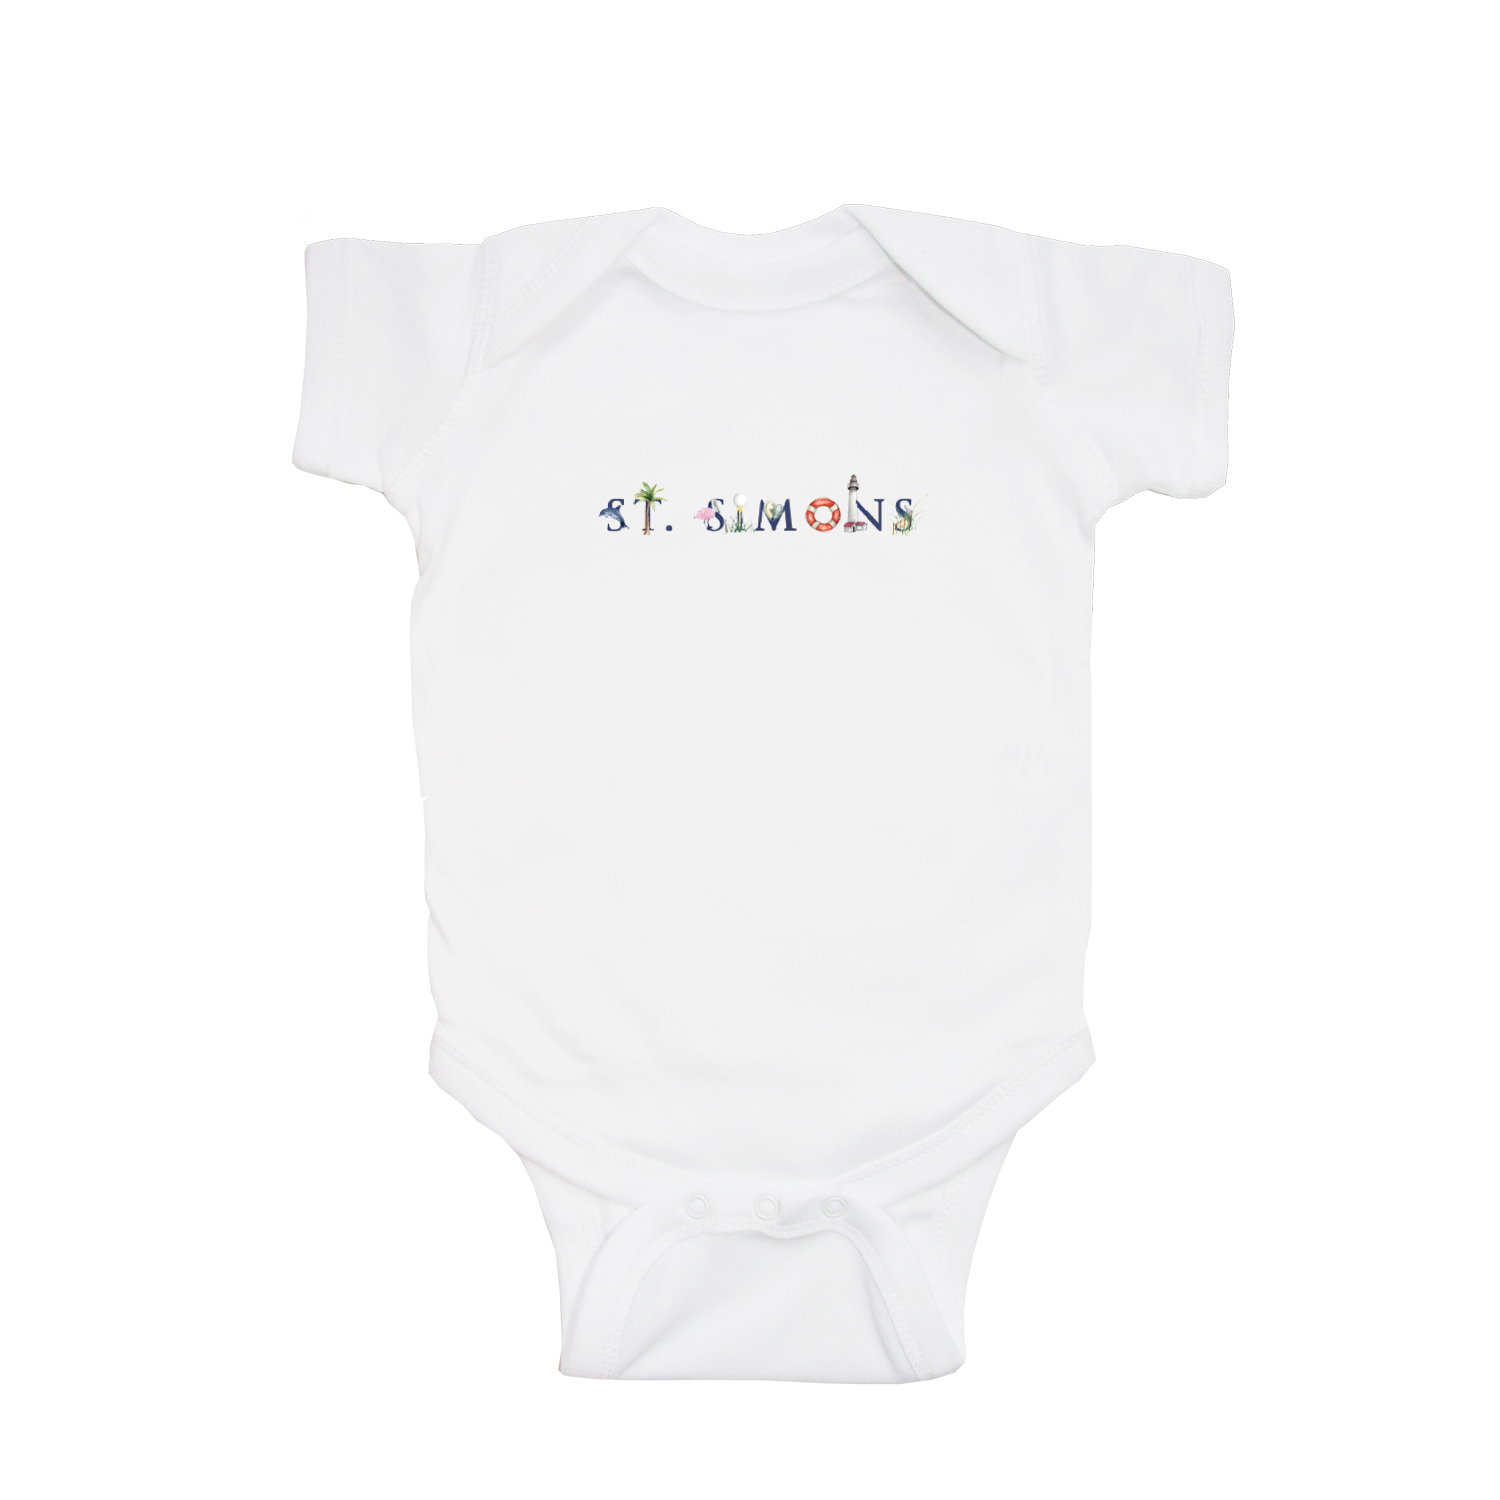 St. Simons baby snap up short sleeve